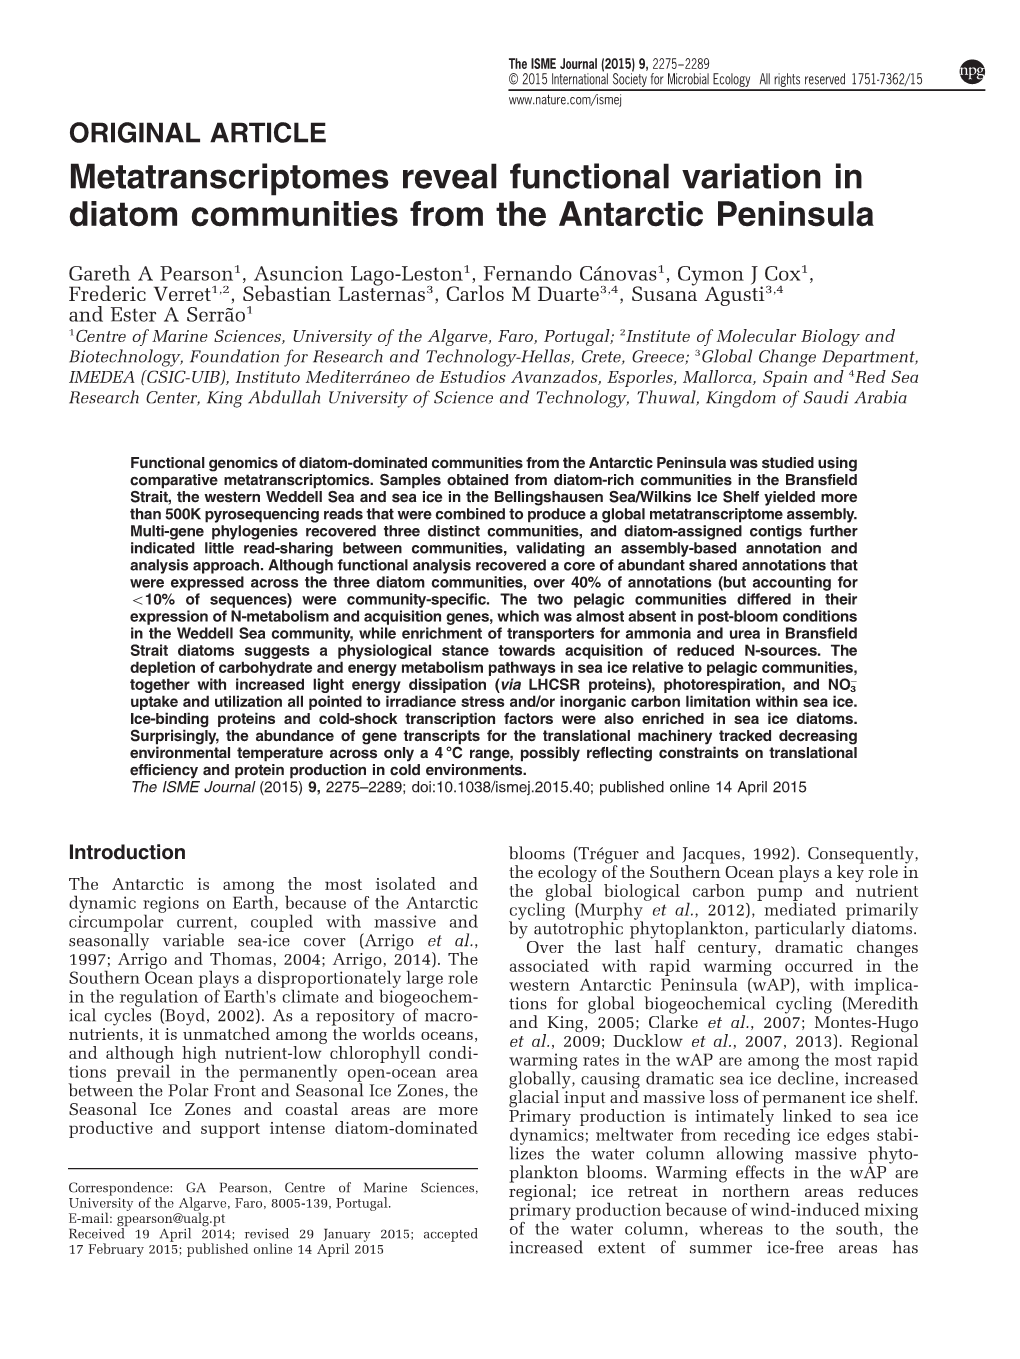 Metatranscriptomes Reveal Functional Variation in Diatom Communities from the Antarctic Peninsula